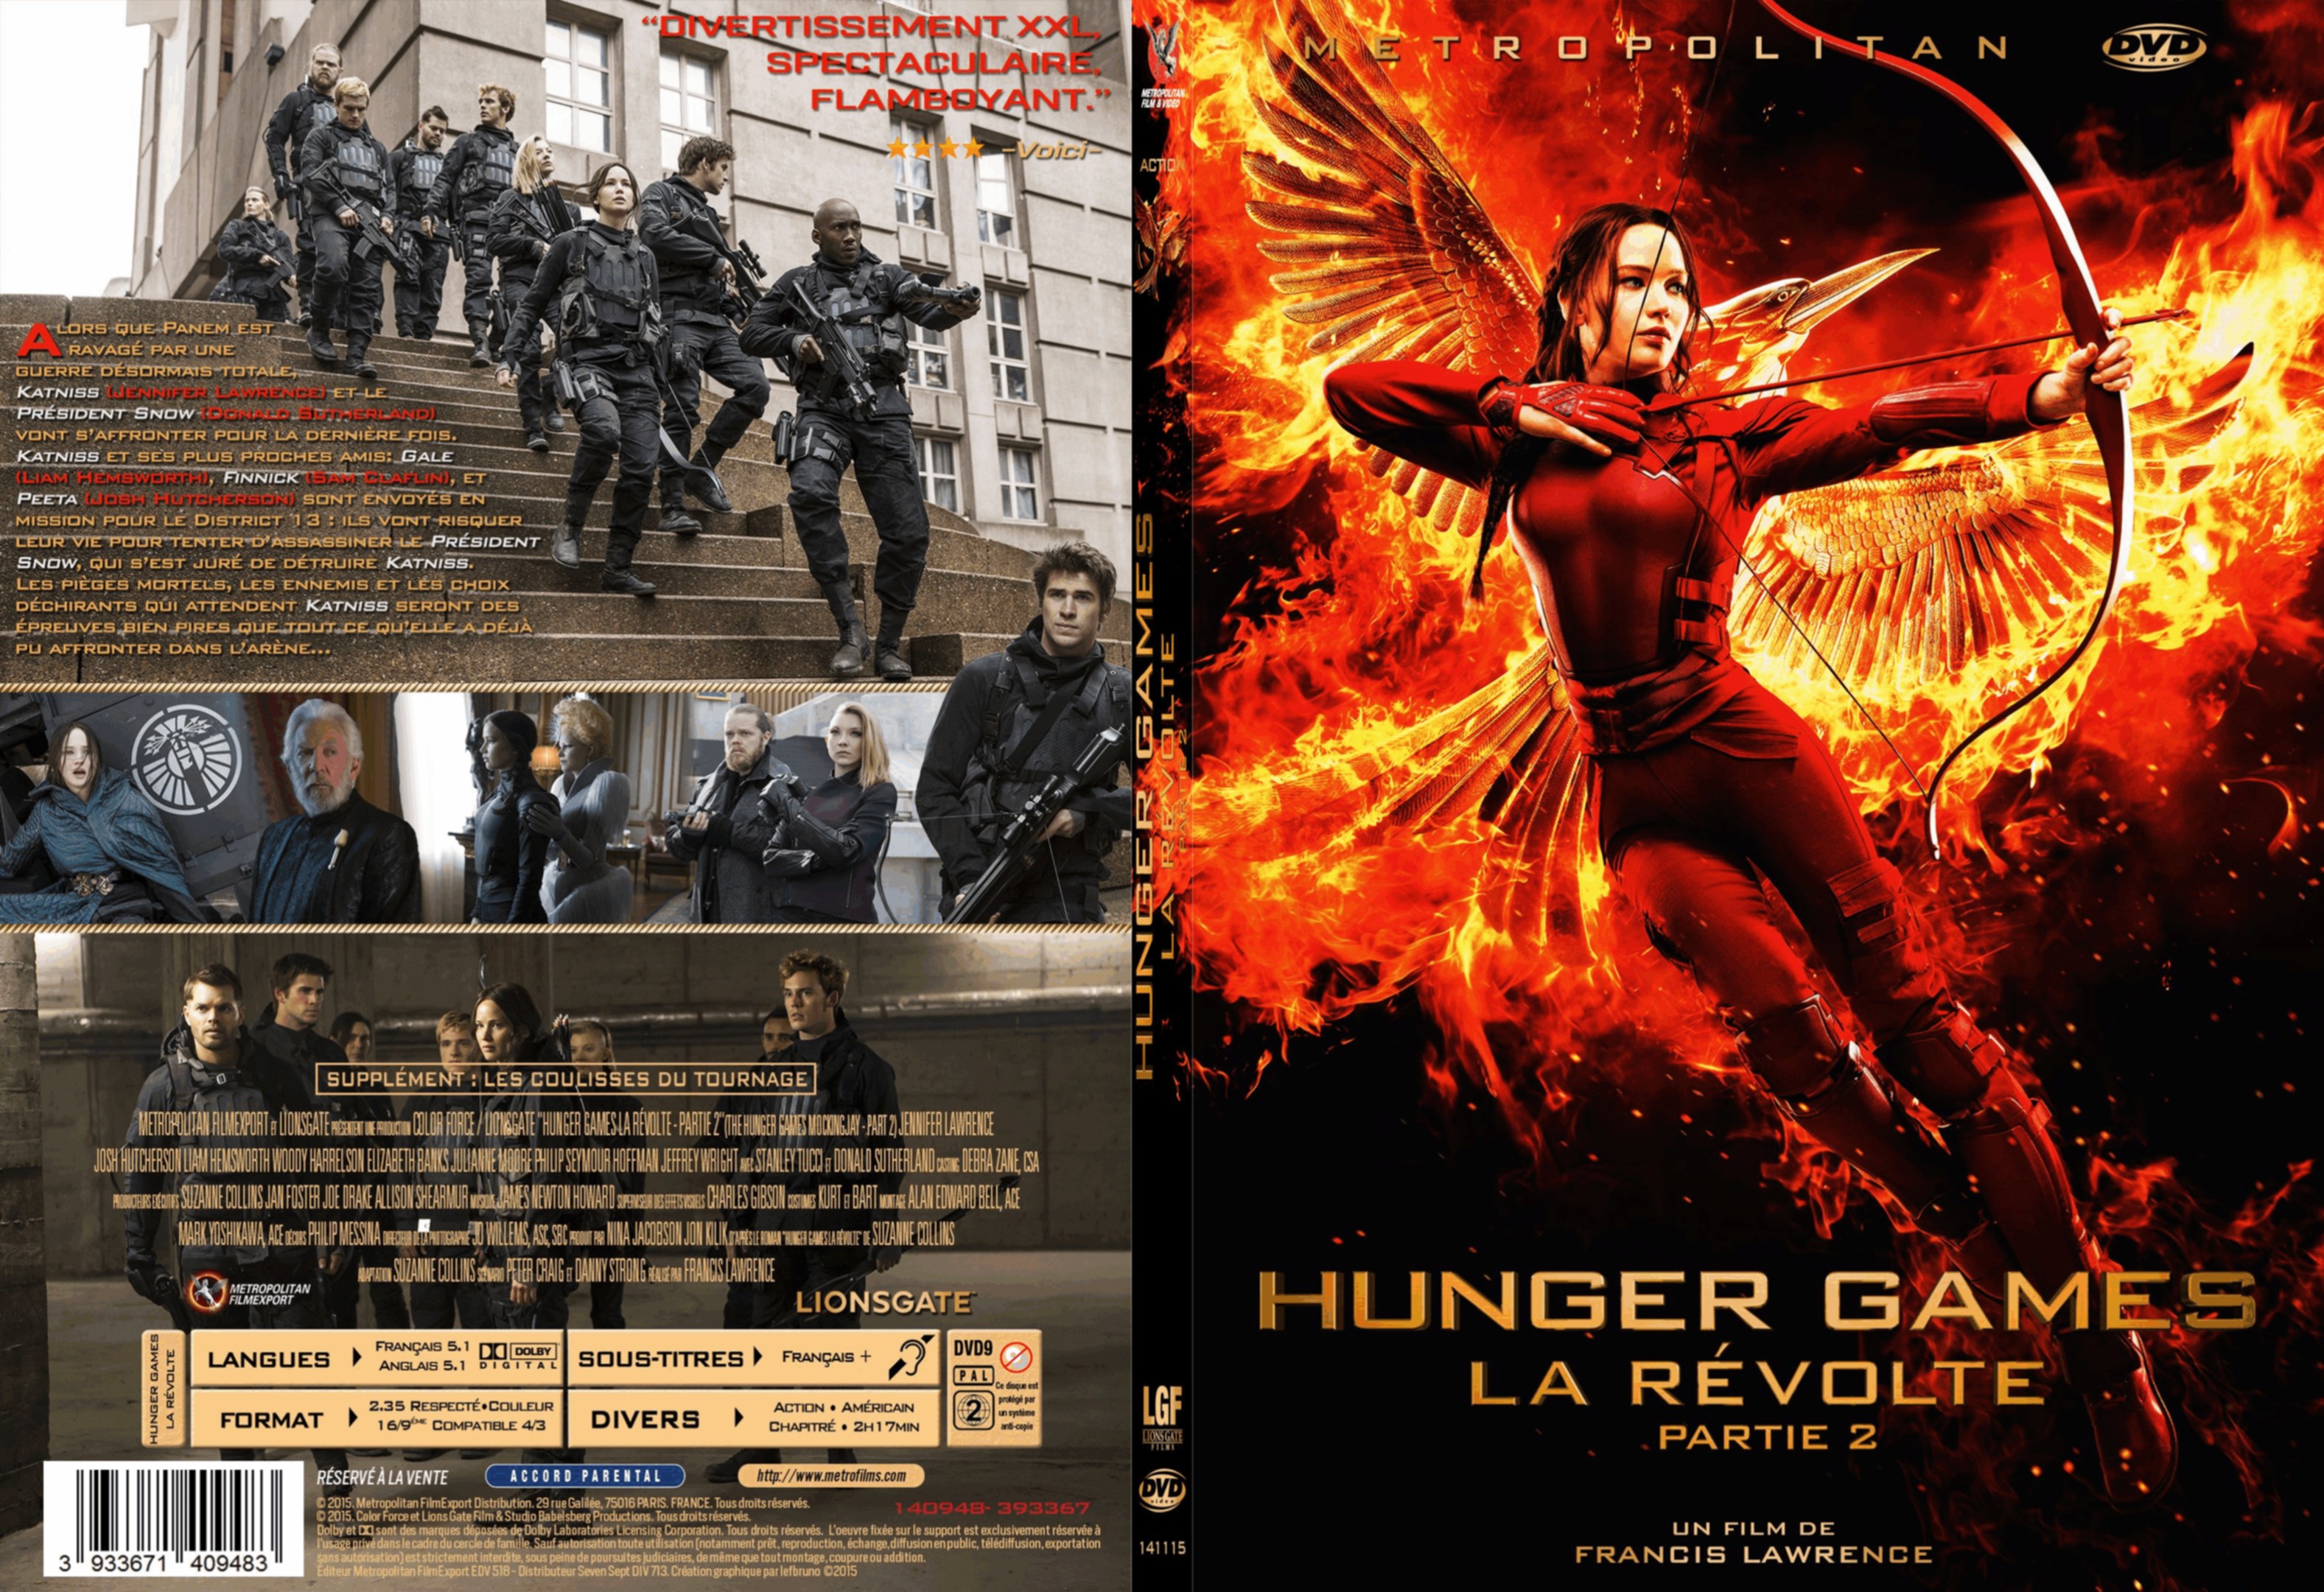 Jaquette DVD Hunger Games La Rvolte : Partie 2 custom - SLIM